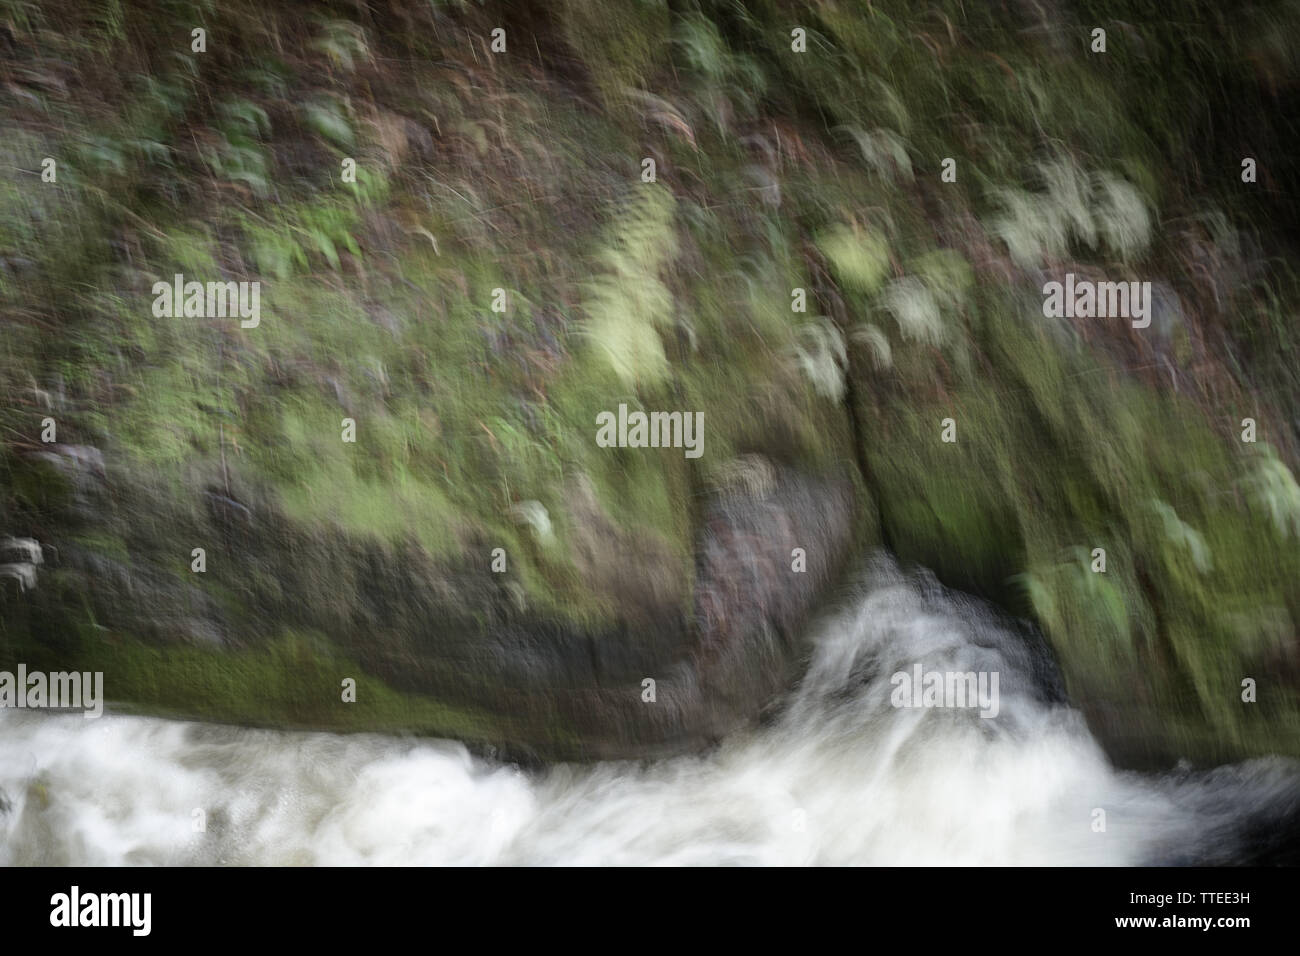 Deliberate camera movement to create artist impression of natural environment. Stock Photo